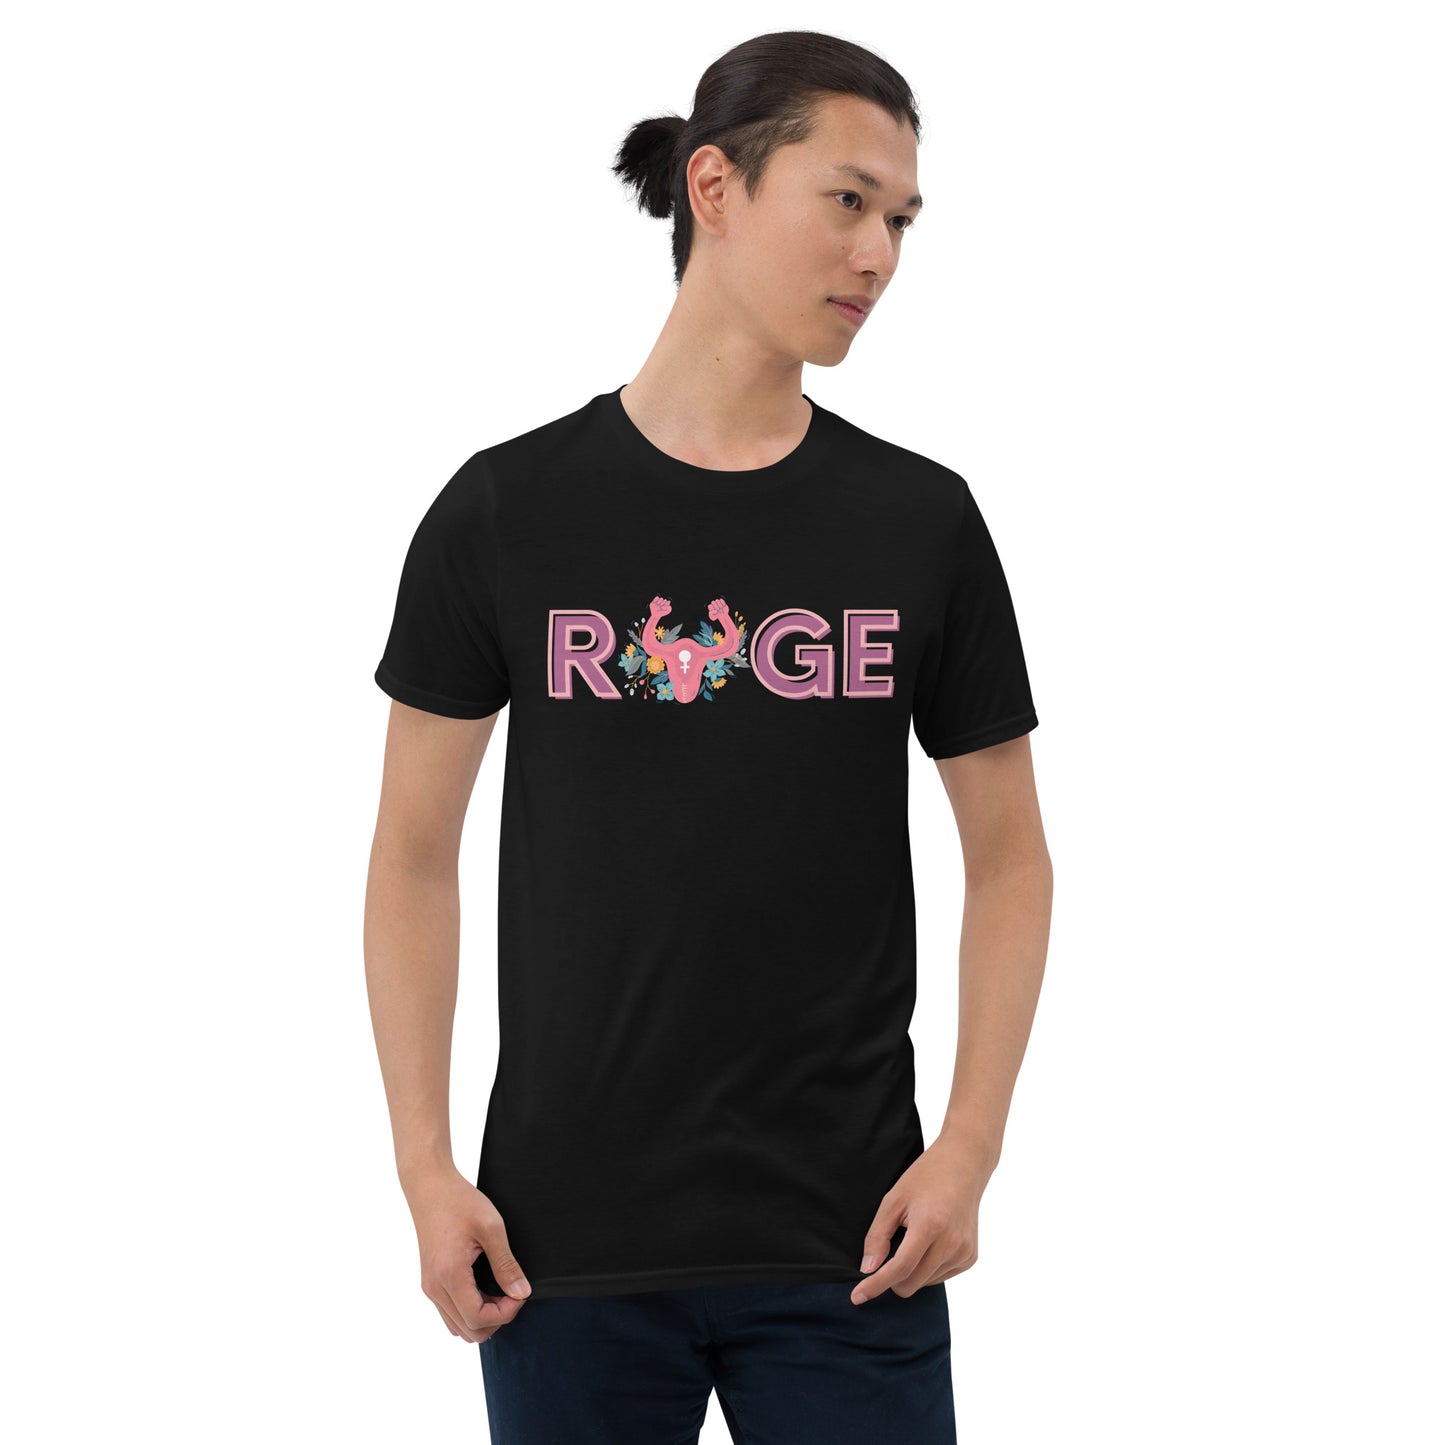 Camiseta unisex de algodón orgánico - RAGE